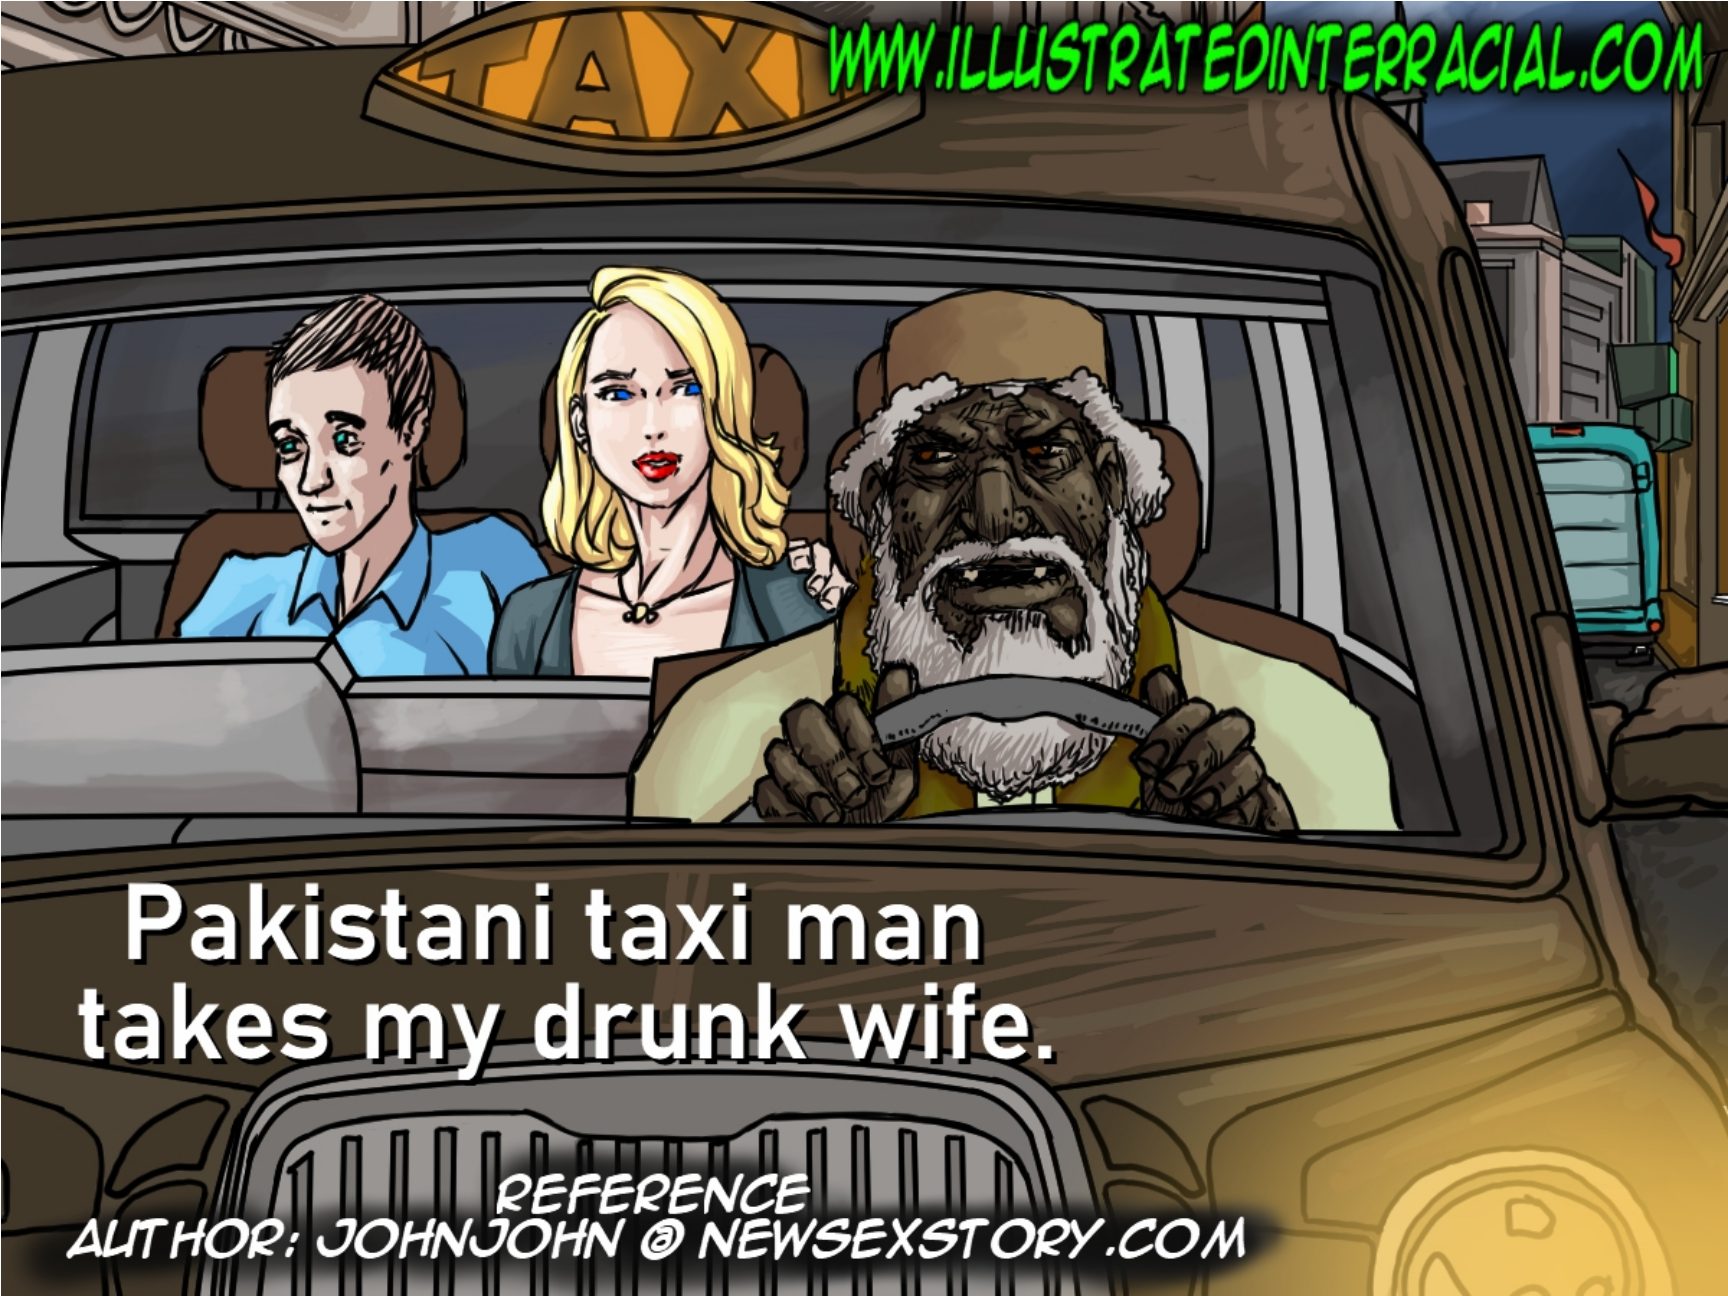 Pakastani Taxi Man - illustratedinterracial image